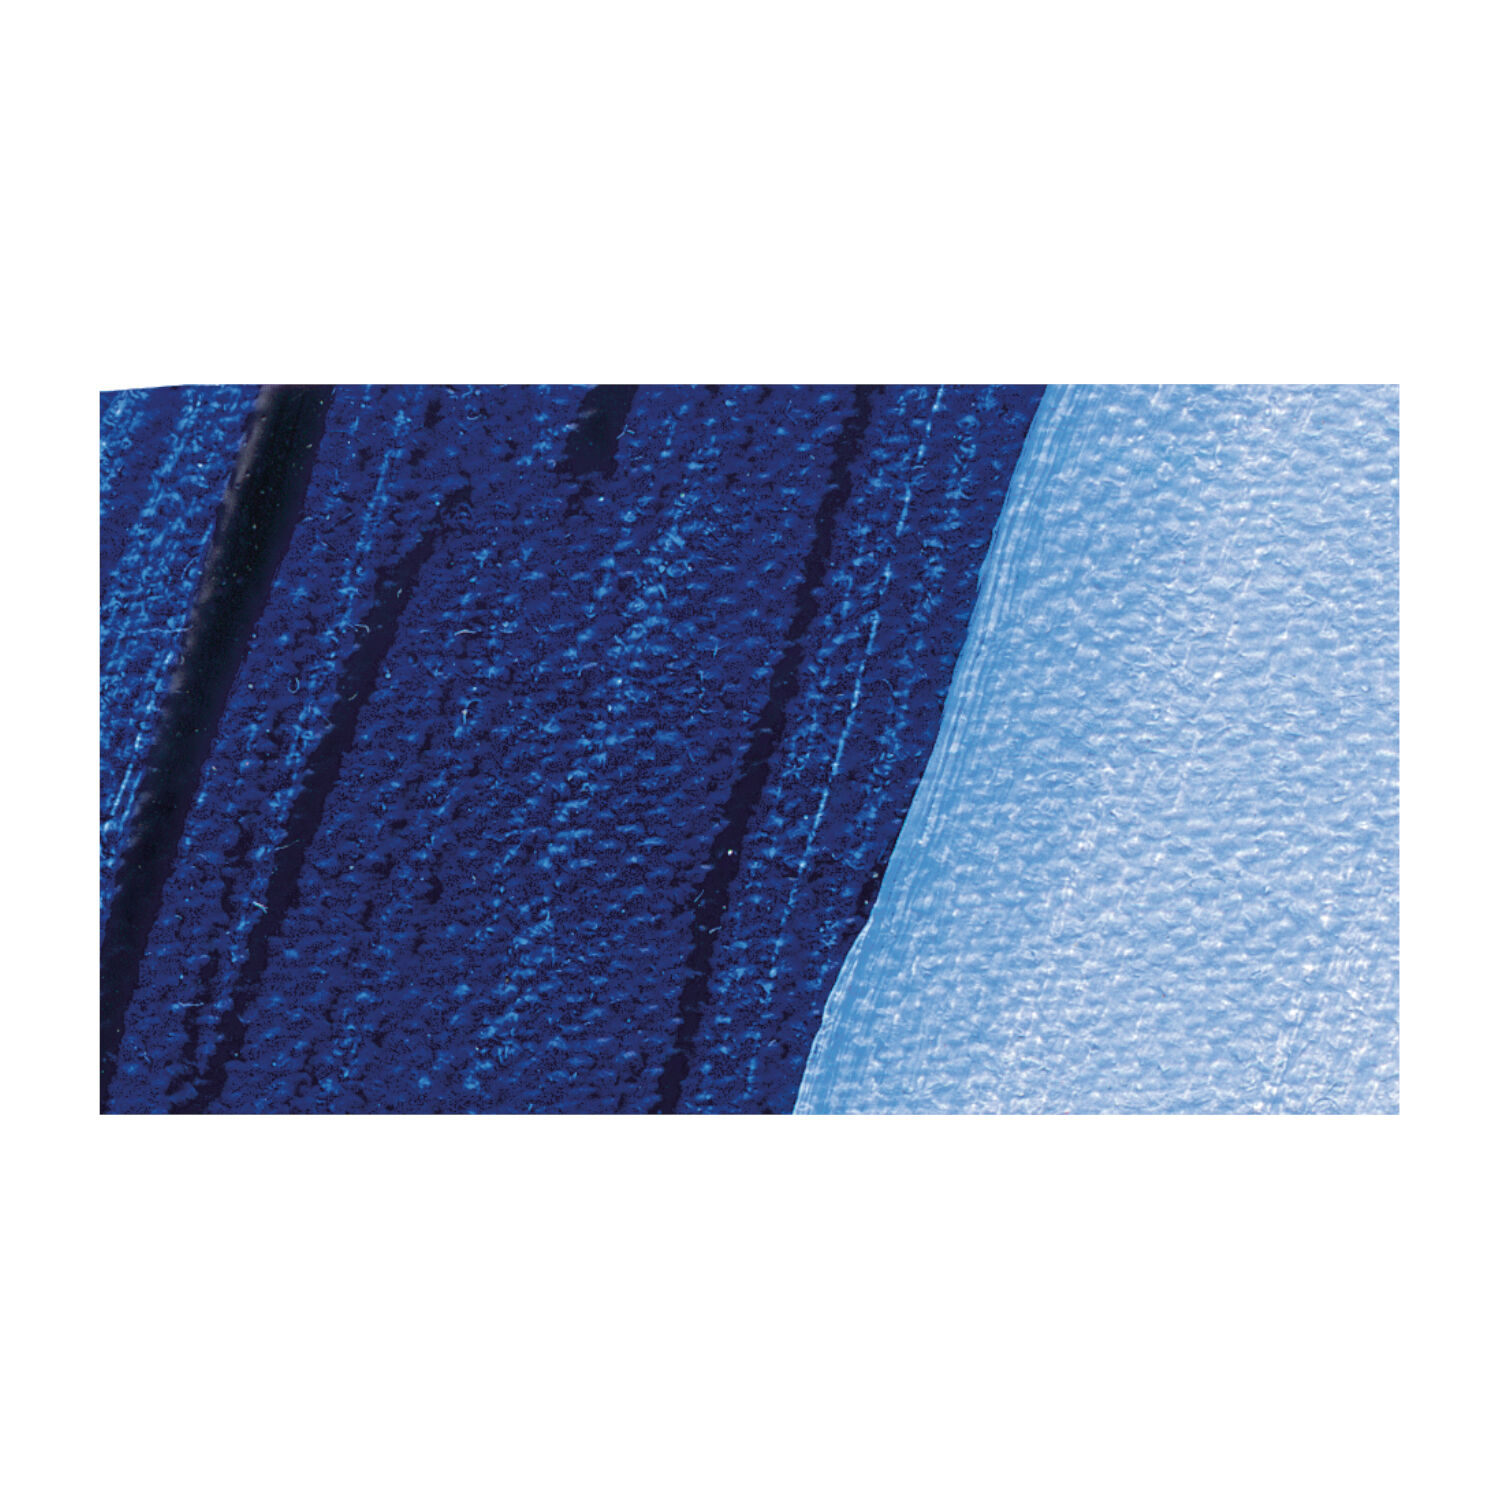 Akademie-Acryl 500ml, Ultramarinblau Bild 2